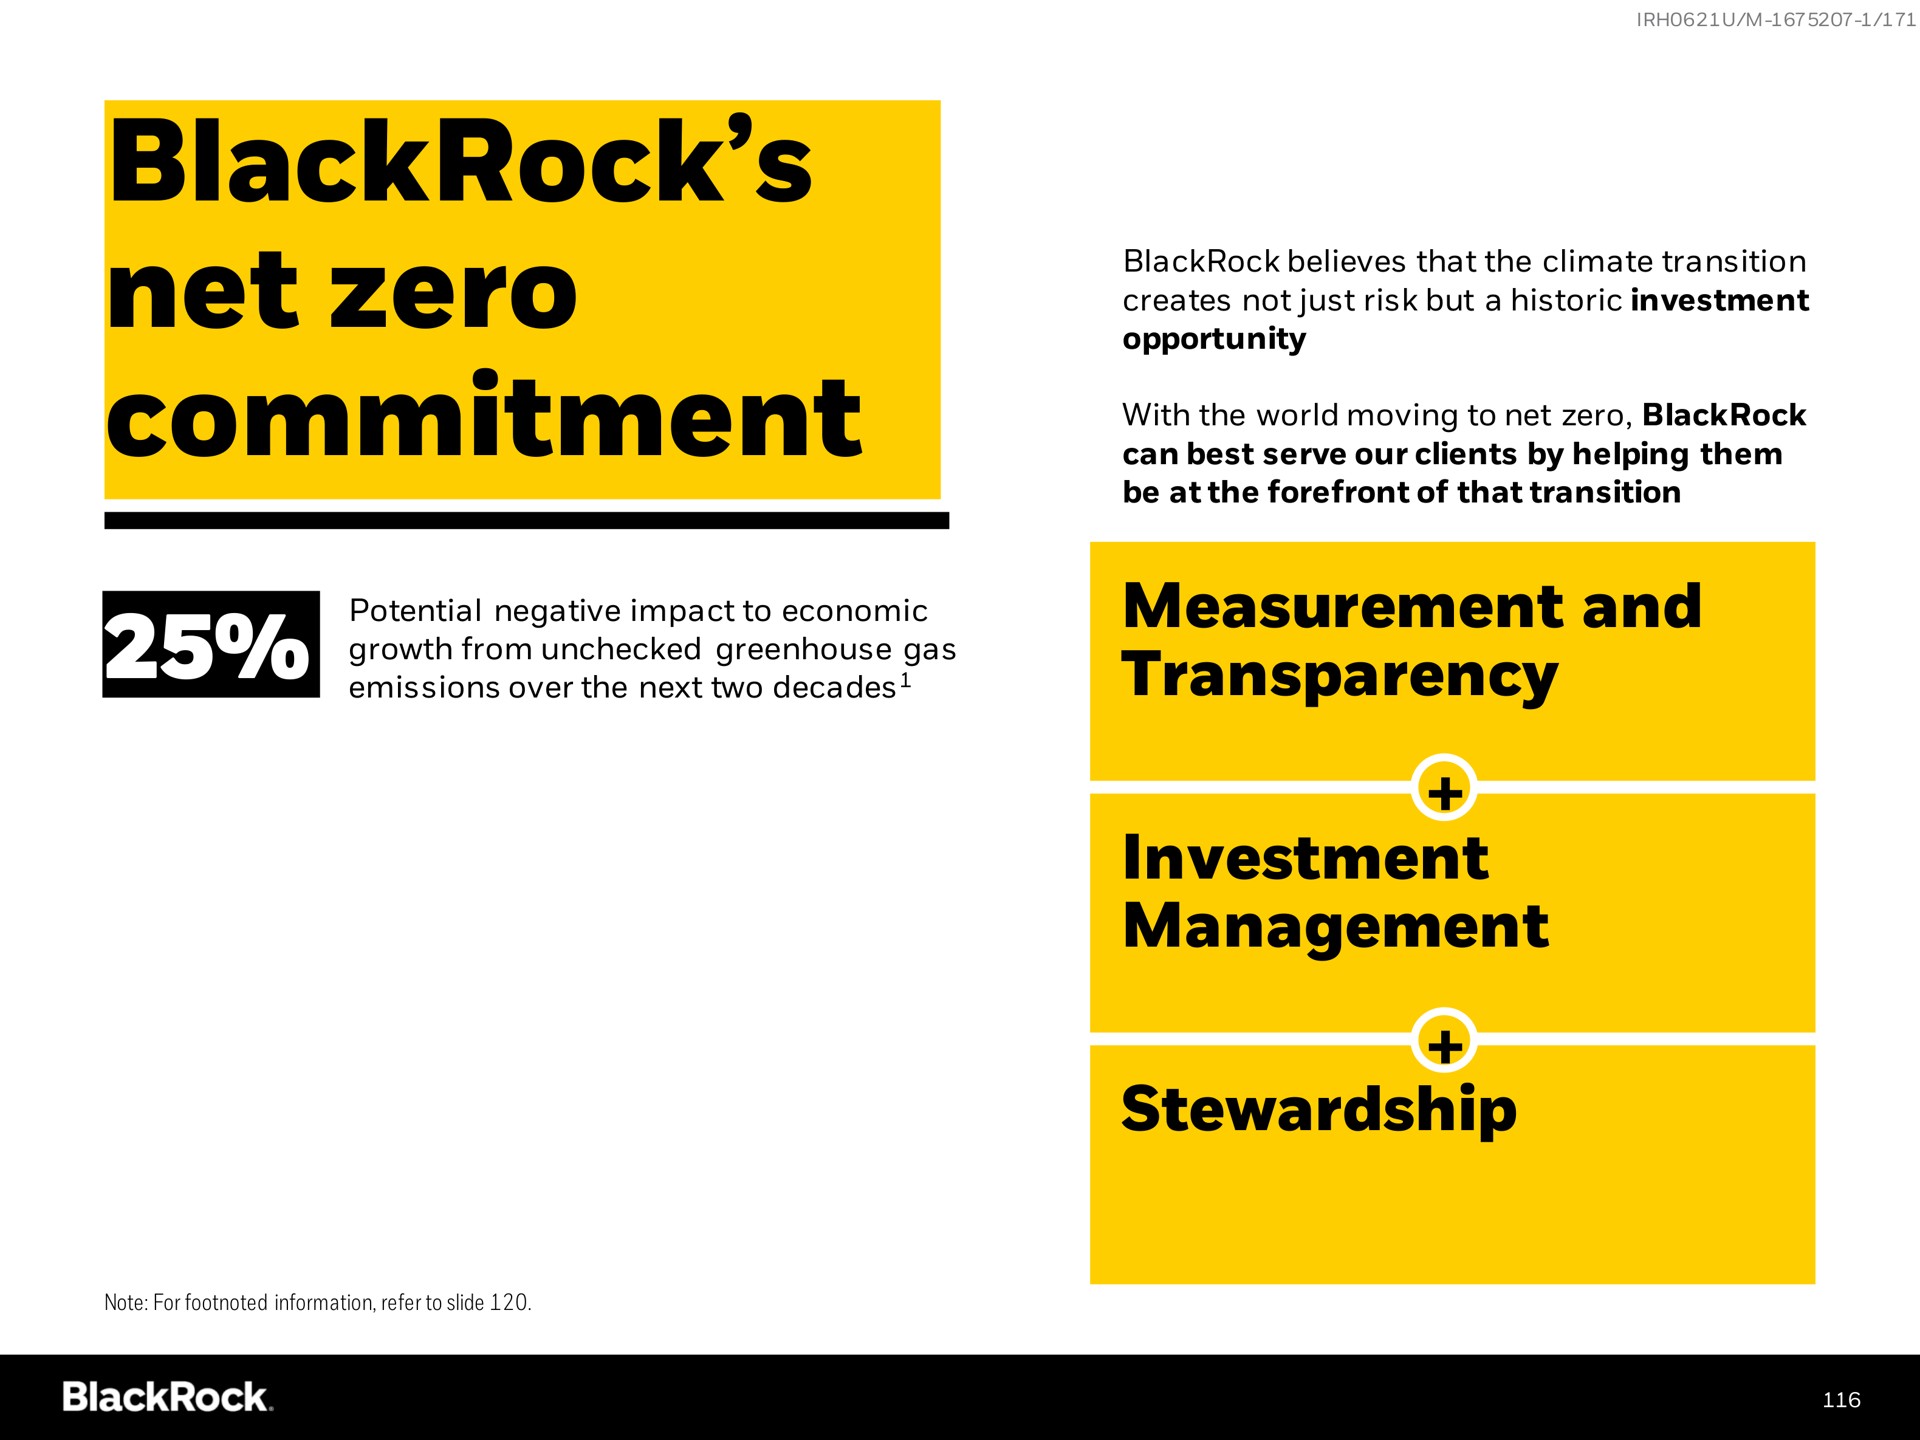 net zero commitment measurement and transparency investment management stewardship | BlackRock